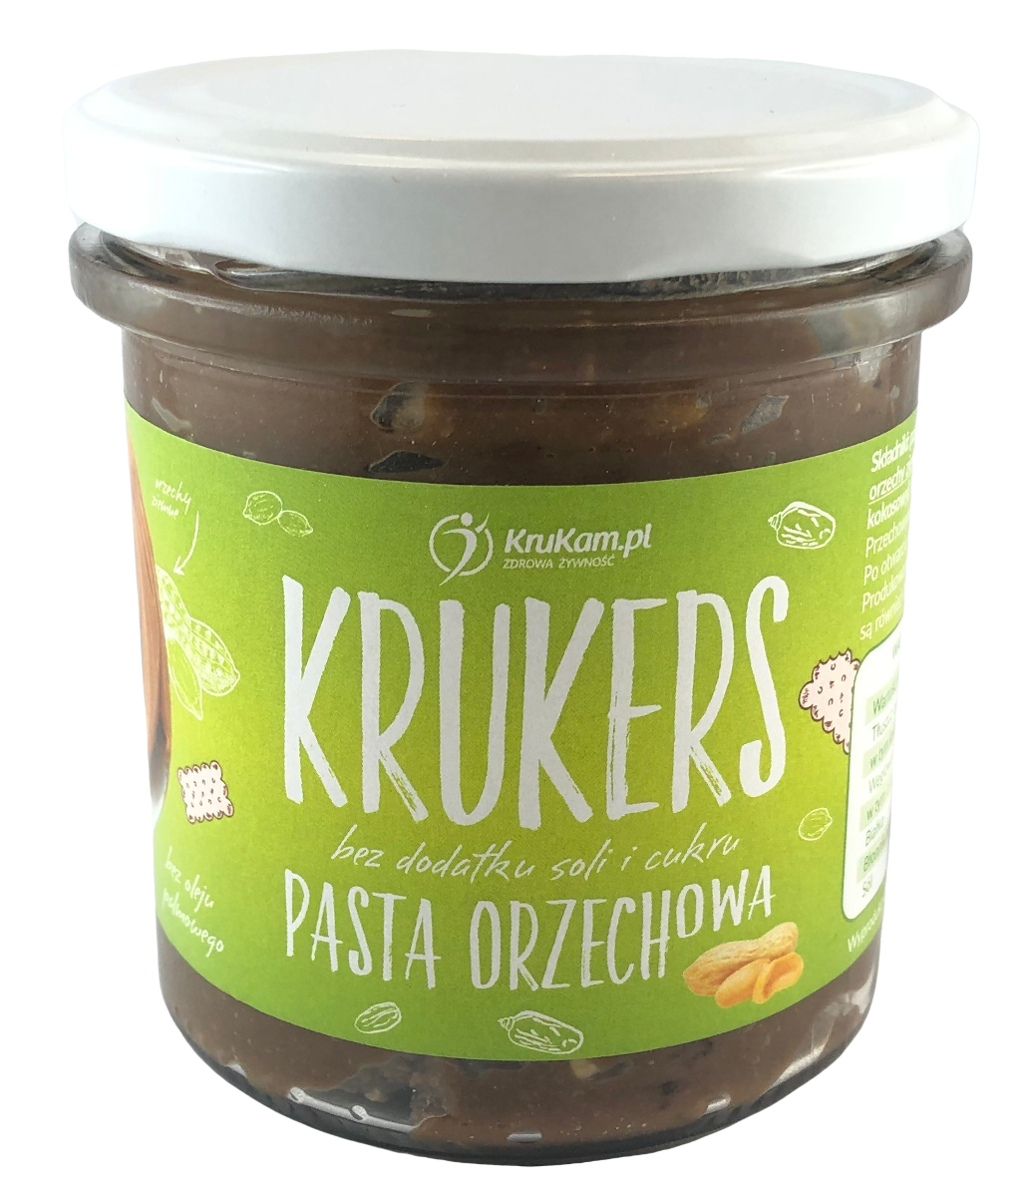 Pasta Orzechowa Krukers od KruKam